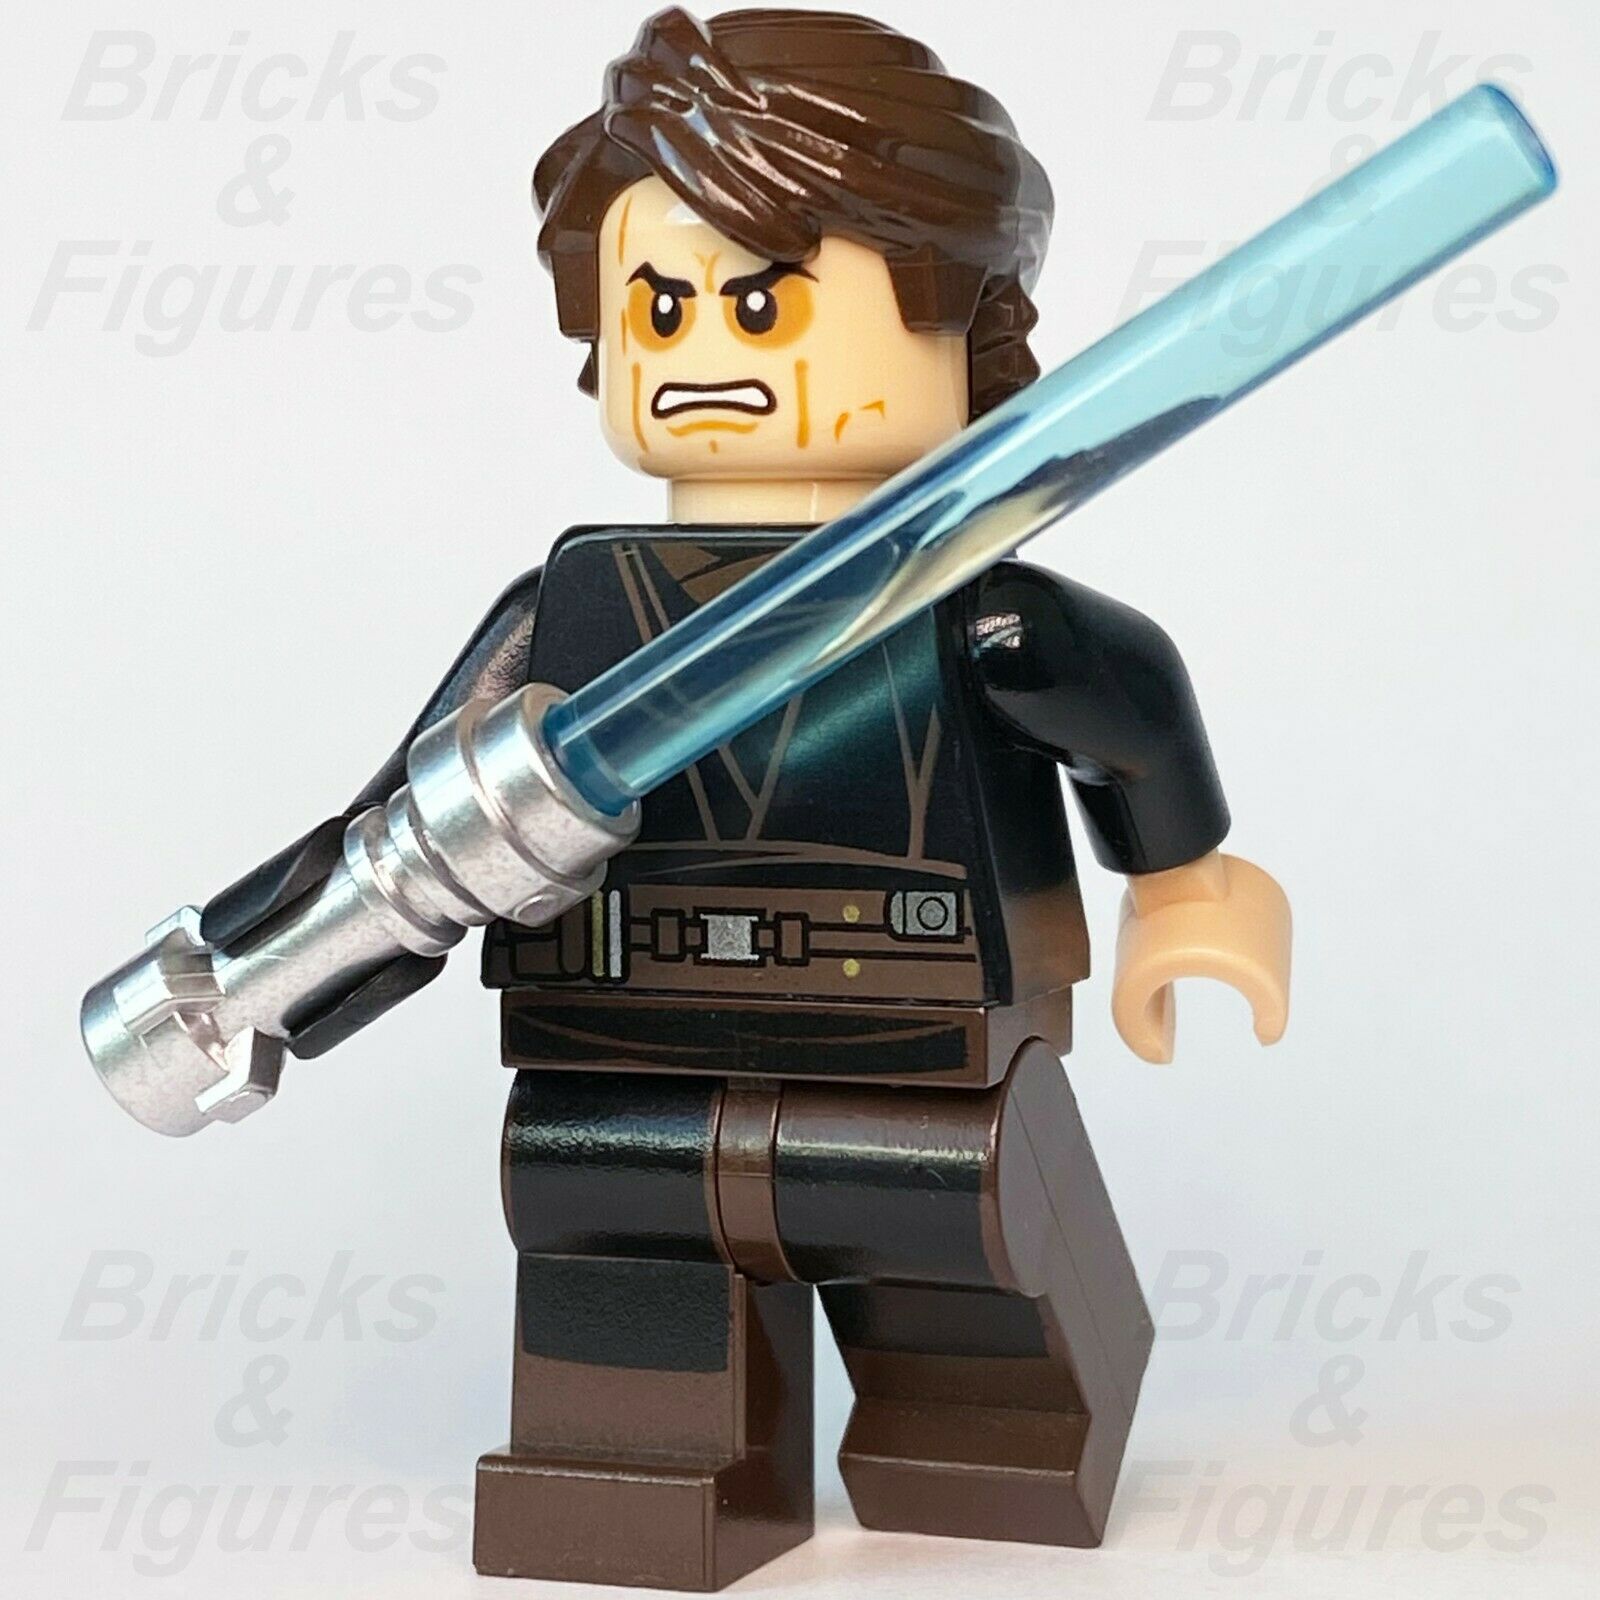 Star Wars LEGO Anakin Skywalker / Darth Vader Jedi Sith Face Minifigure 9494 - Bricks & Figures